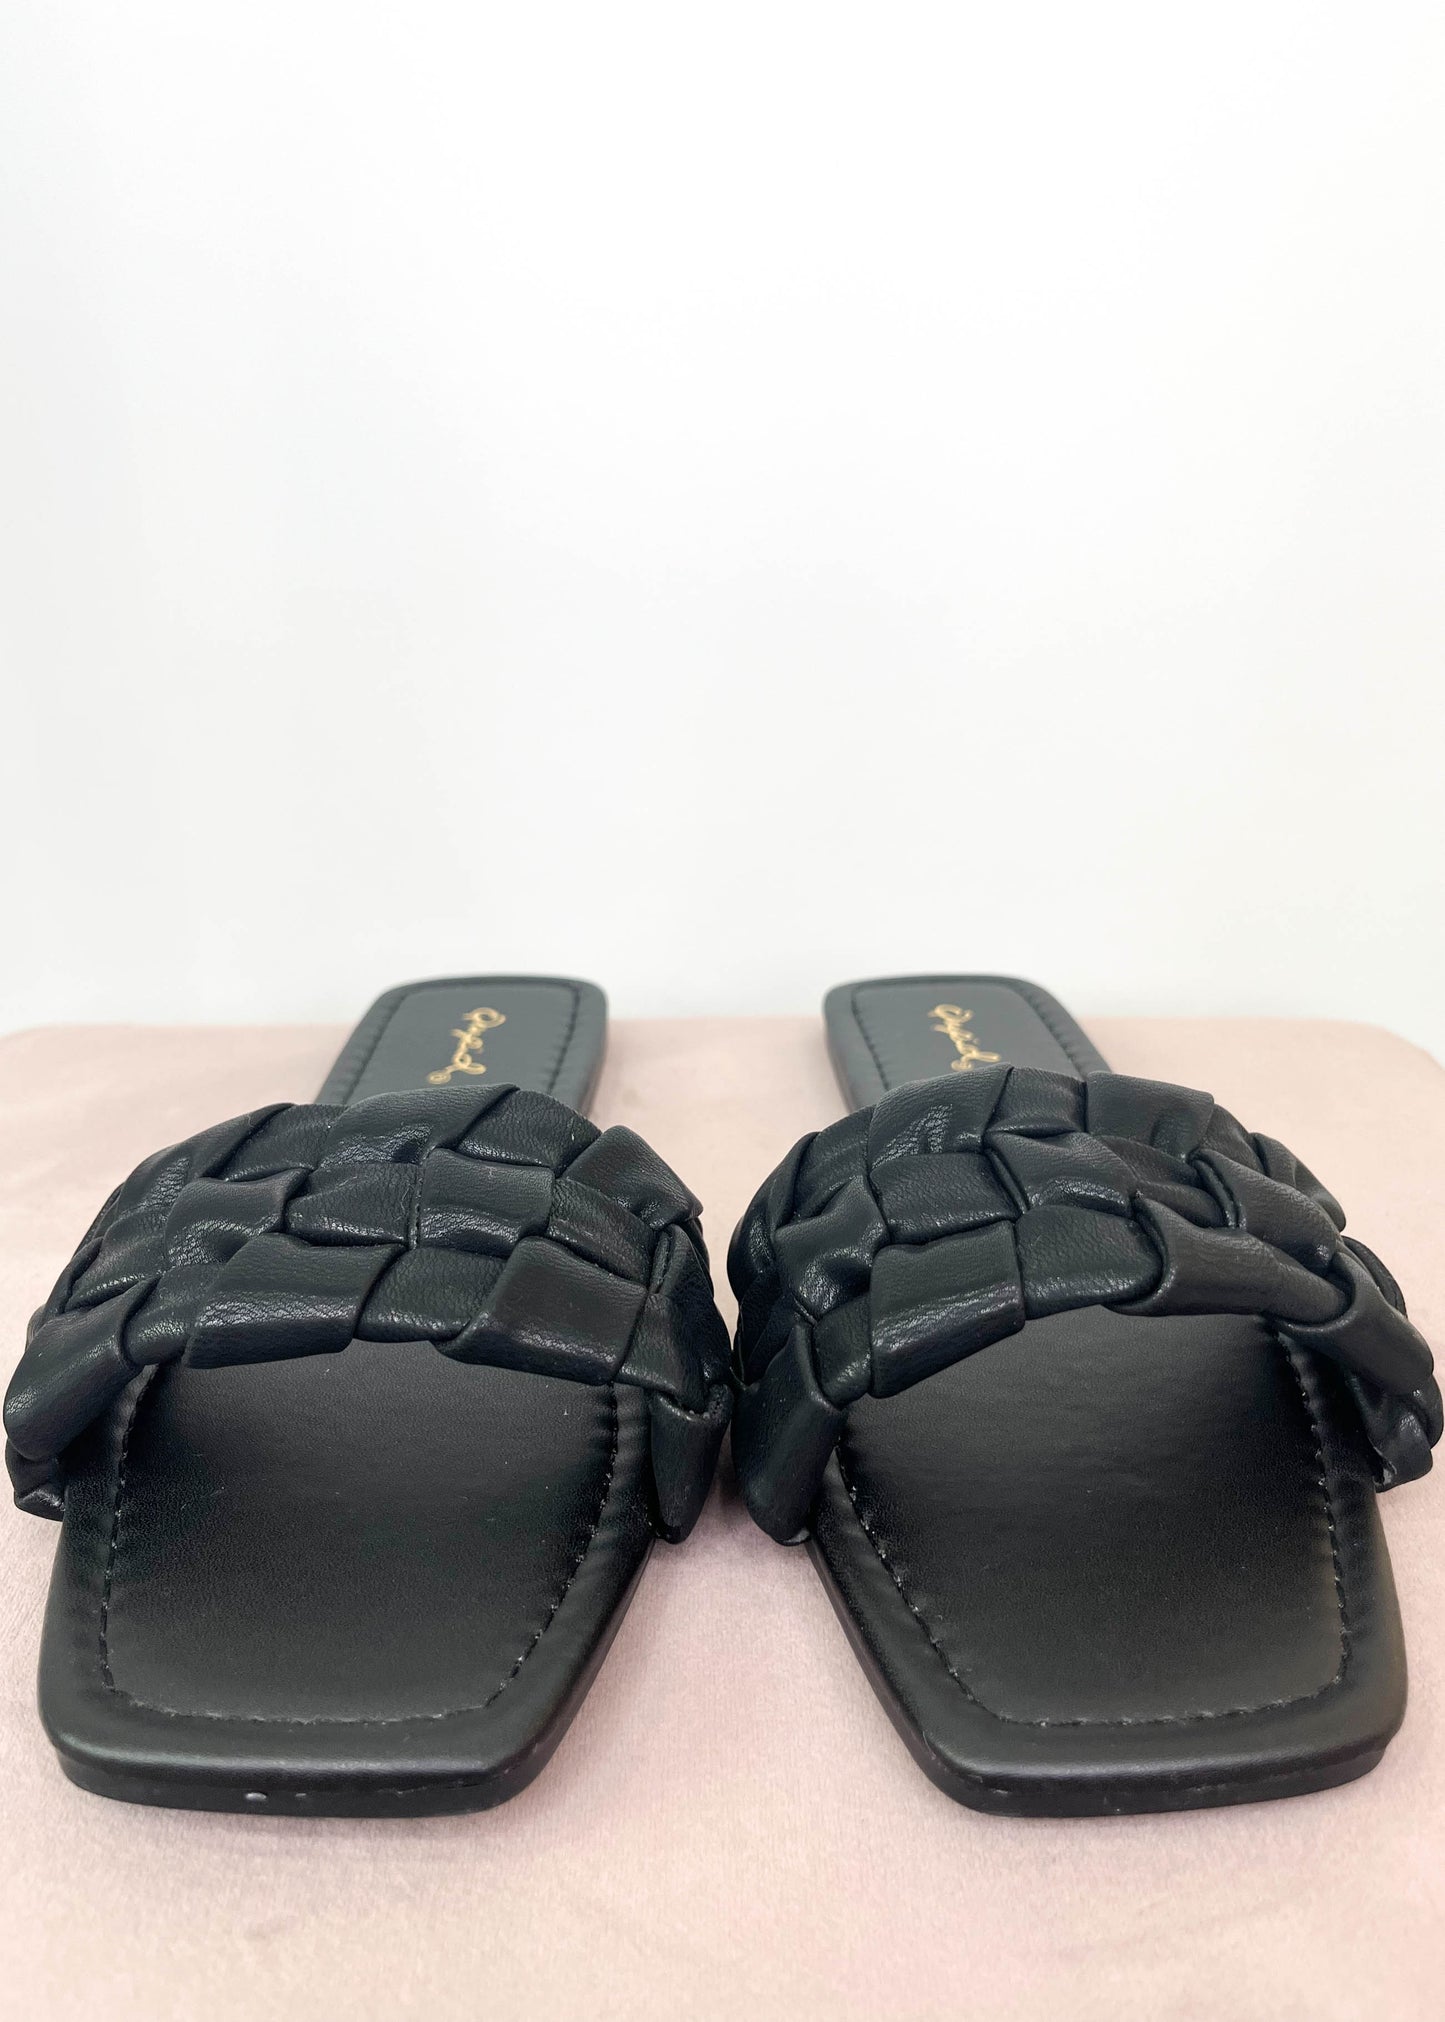 Jacinda Black Sandals